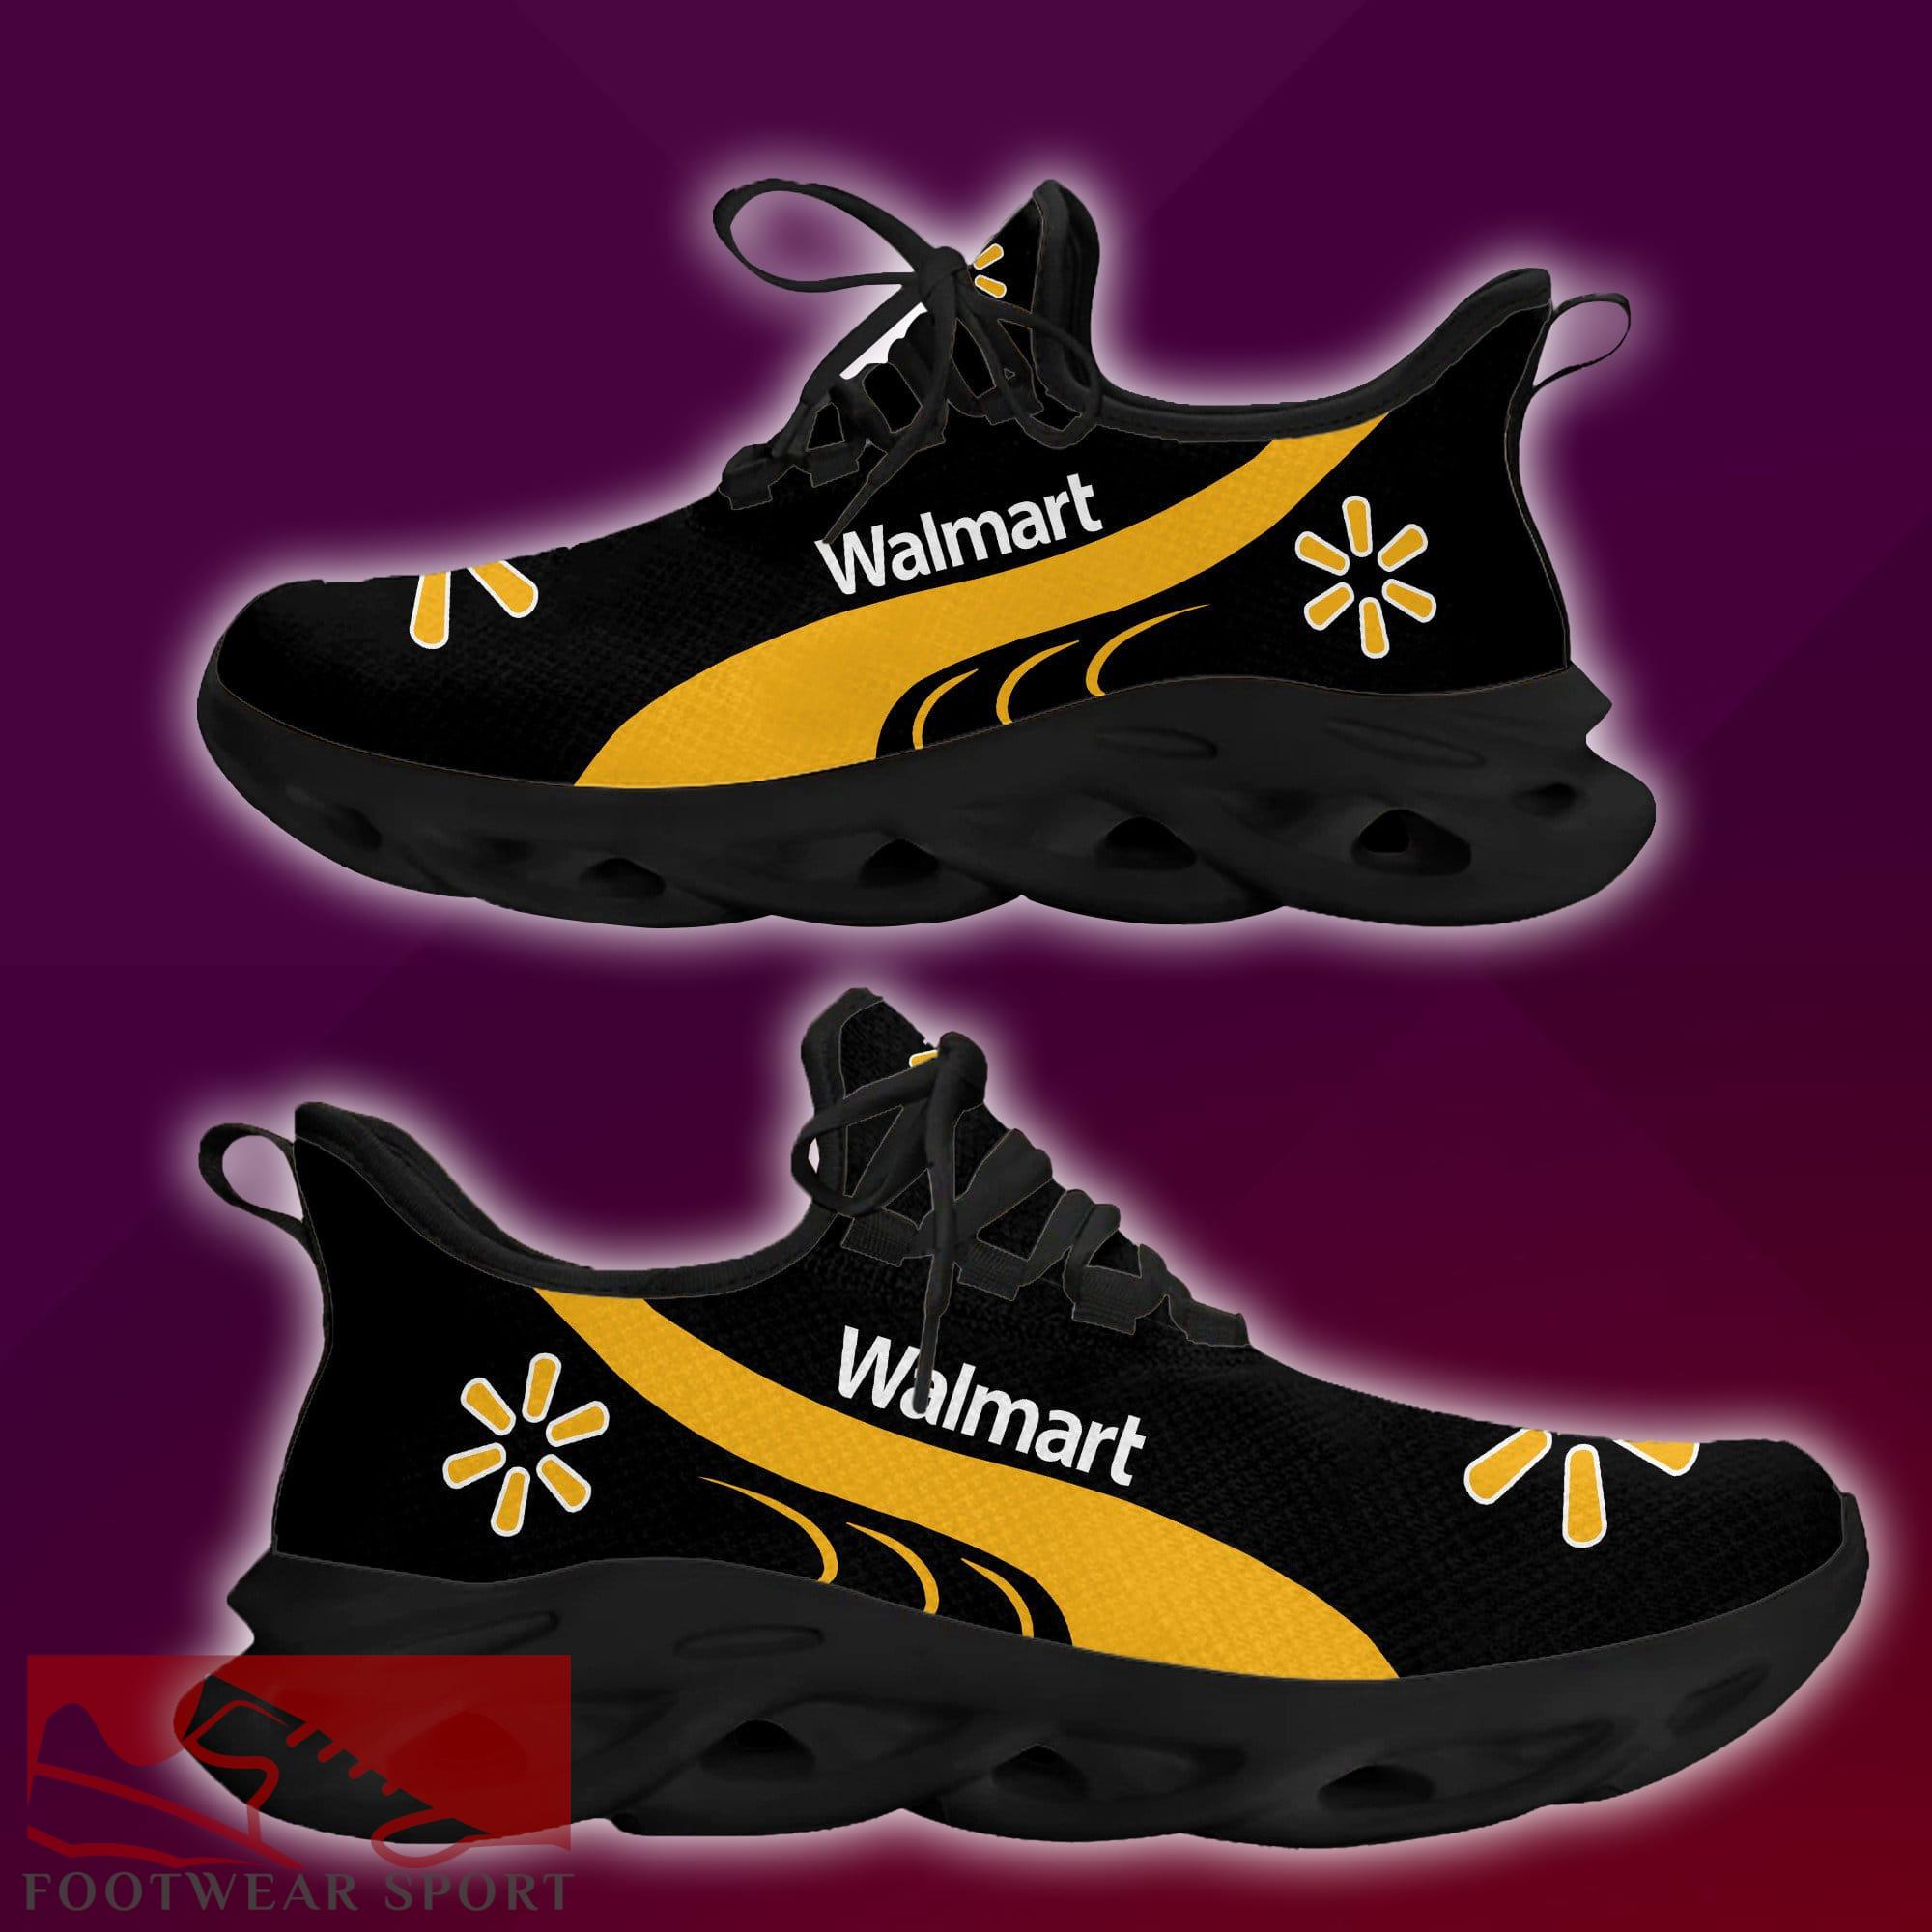 WALMART Brand New Logo Max Soul Sneakers Chic Chunky Shoes Gift - WALMART New Brand Chunky Shoes Style Max Soul Sneakers Photo 1